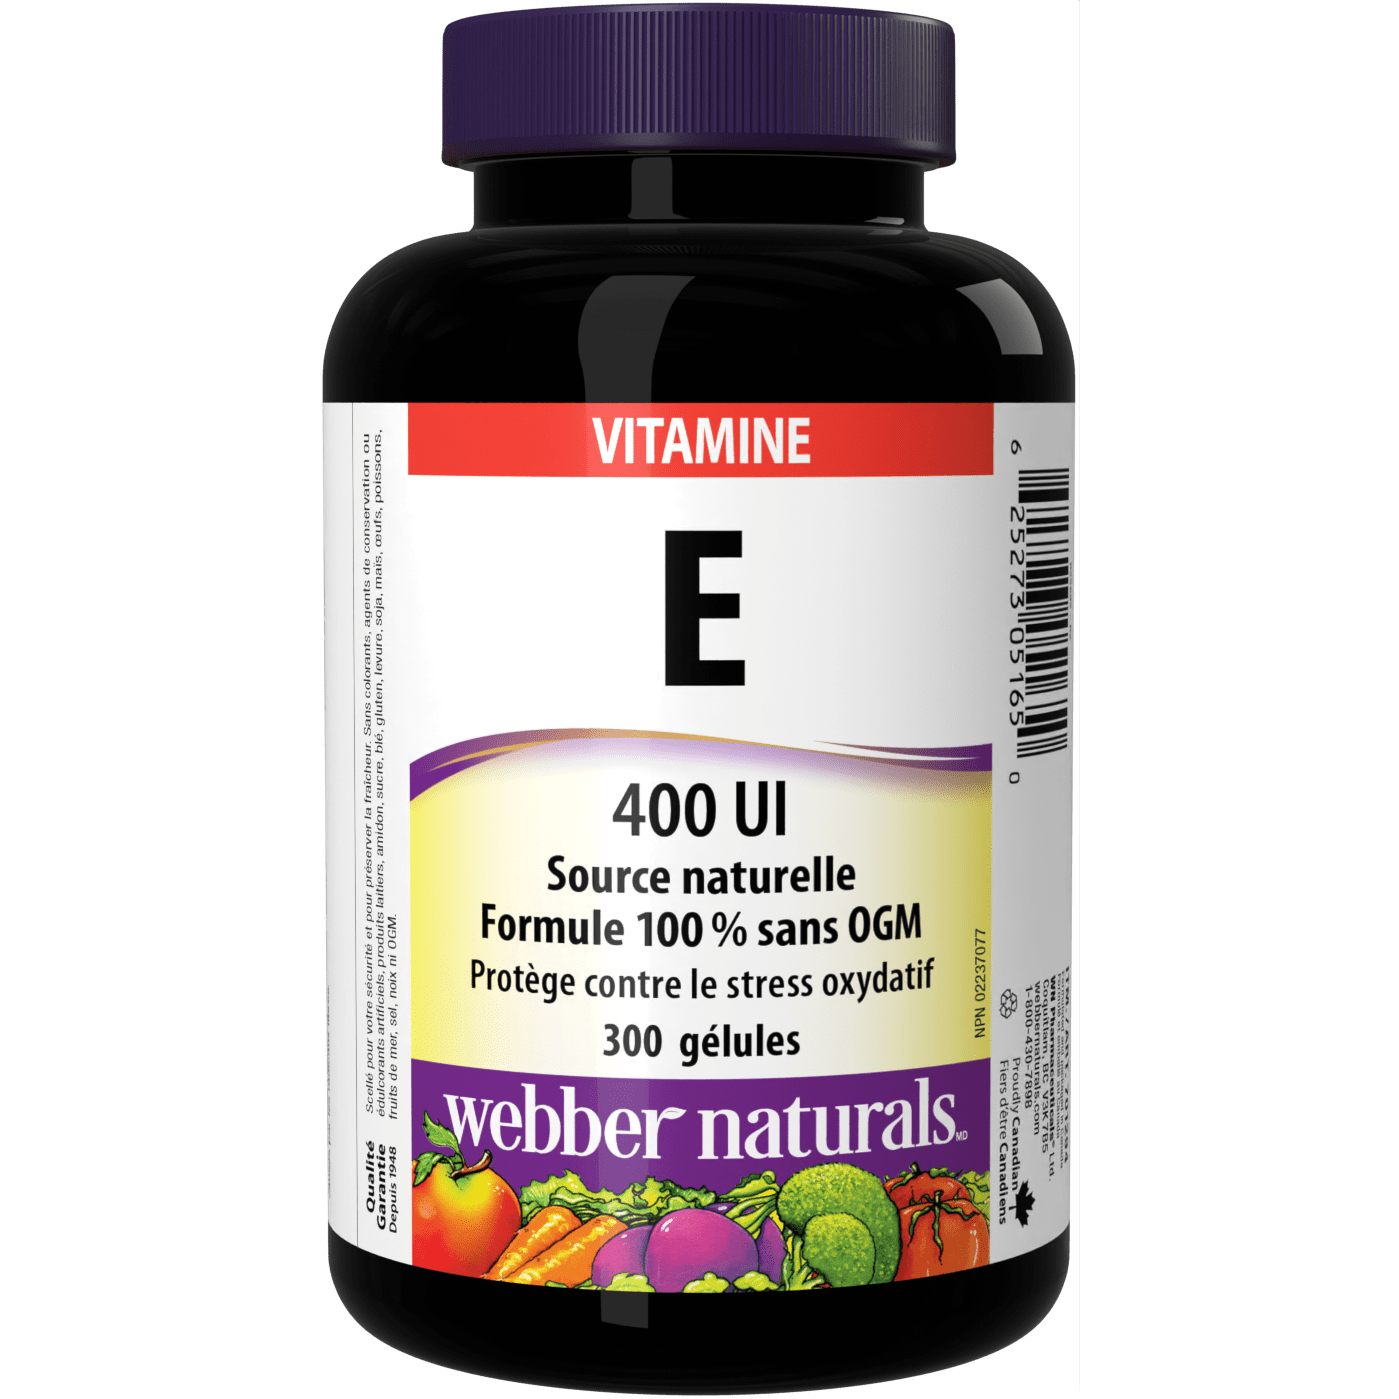 Vitamine E 400 UI gélules for Webber Naturals|v|hi-res|WN5165